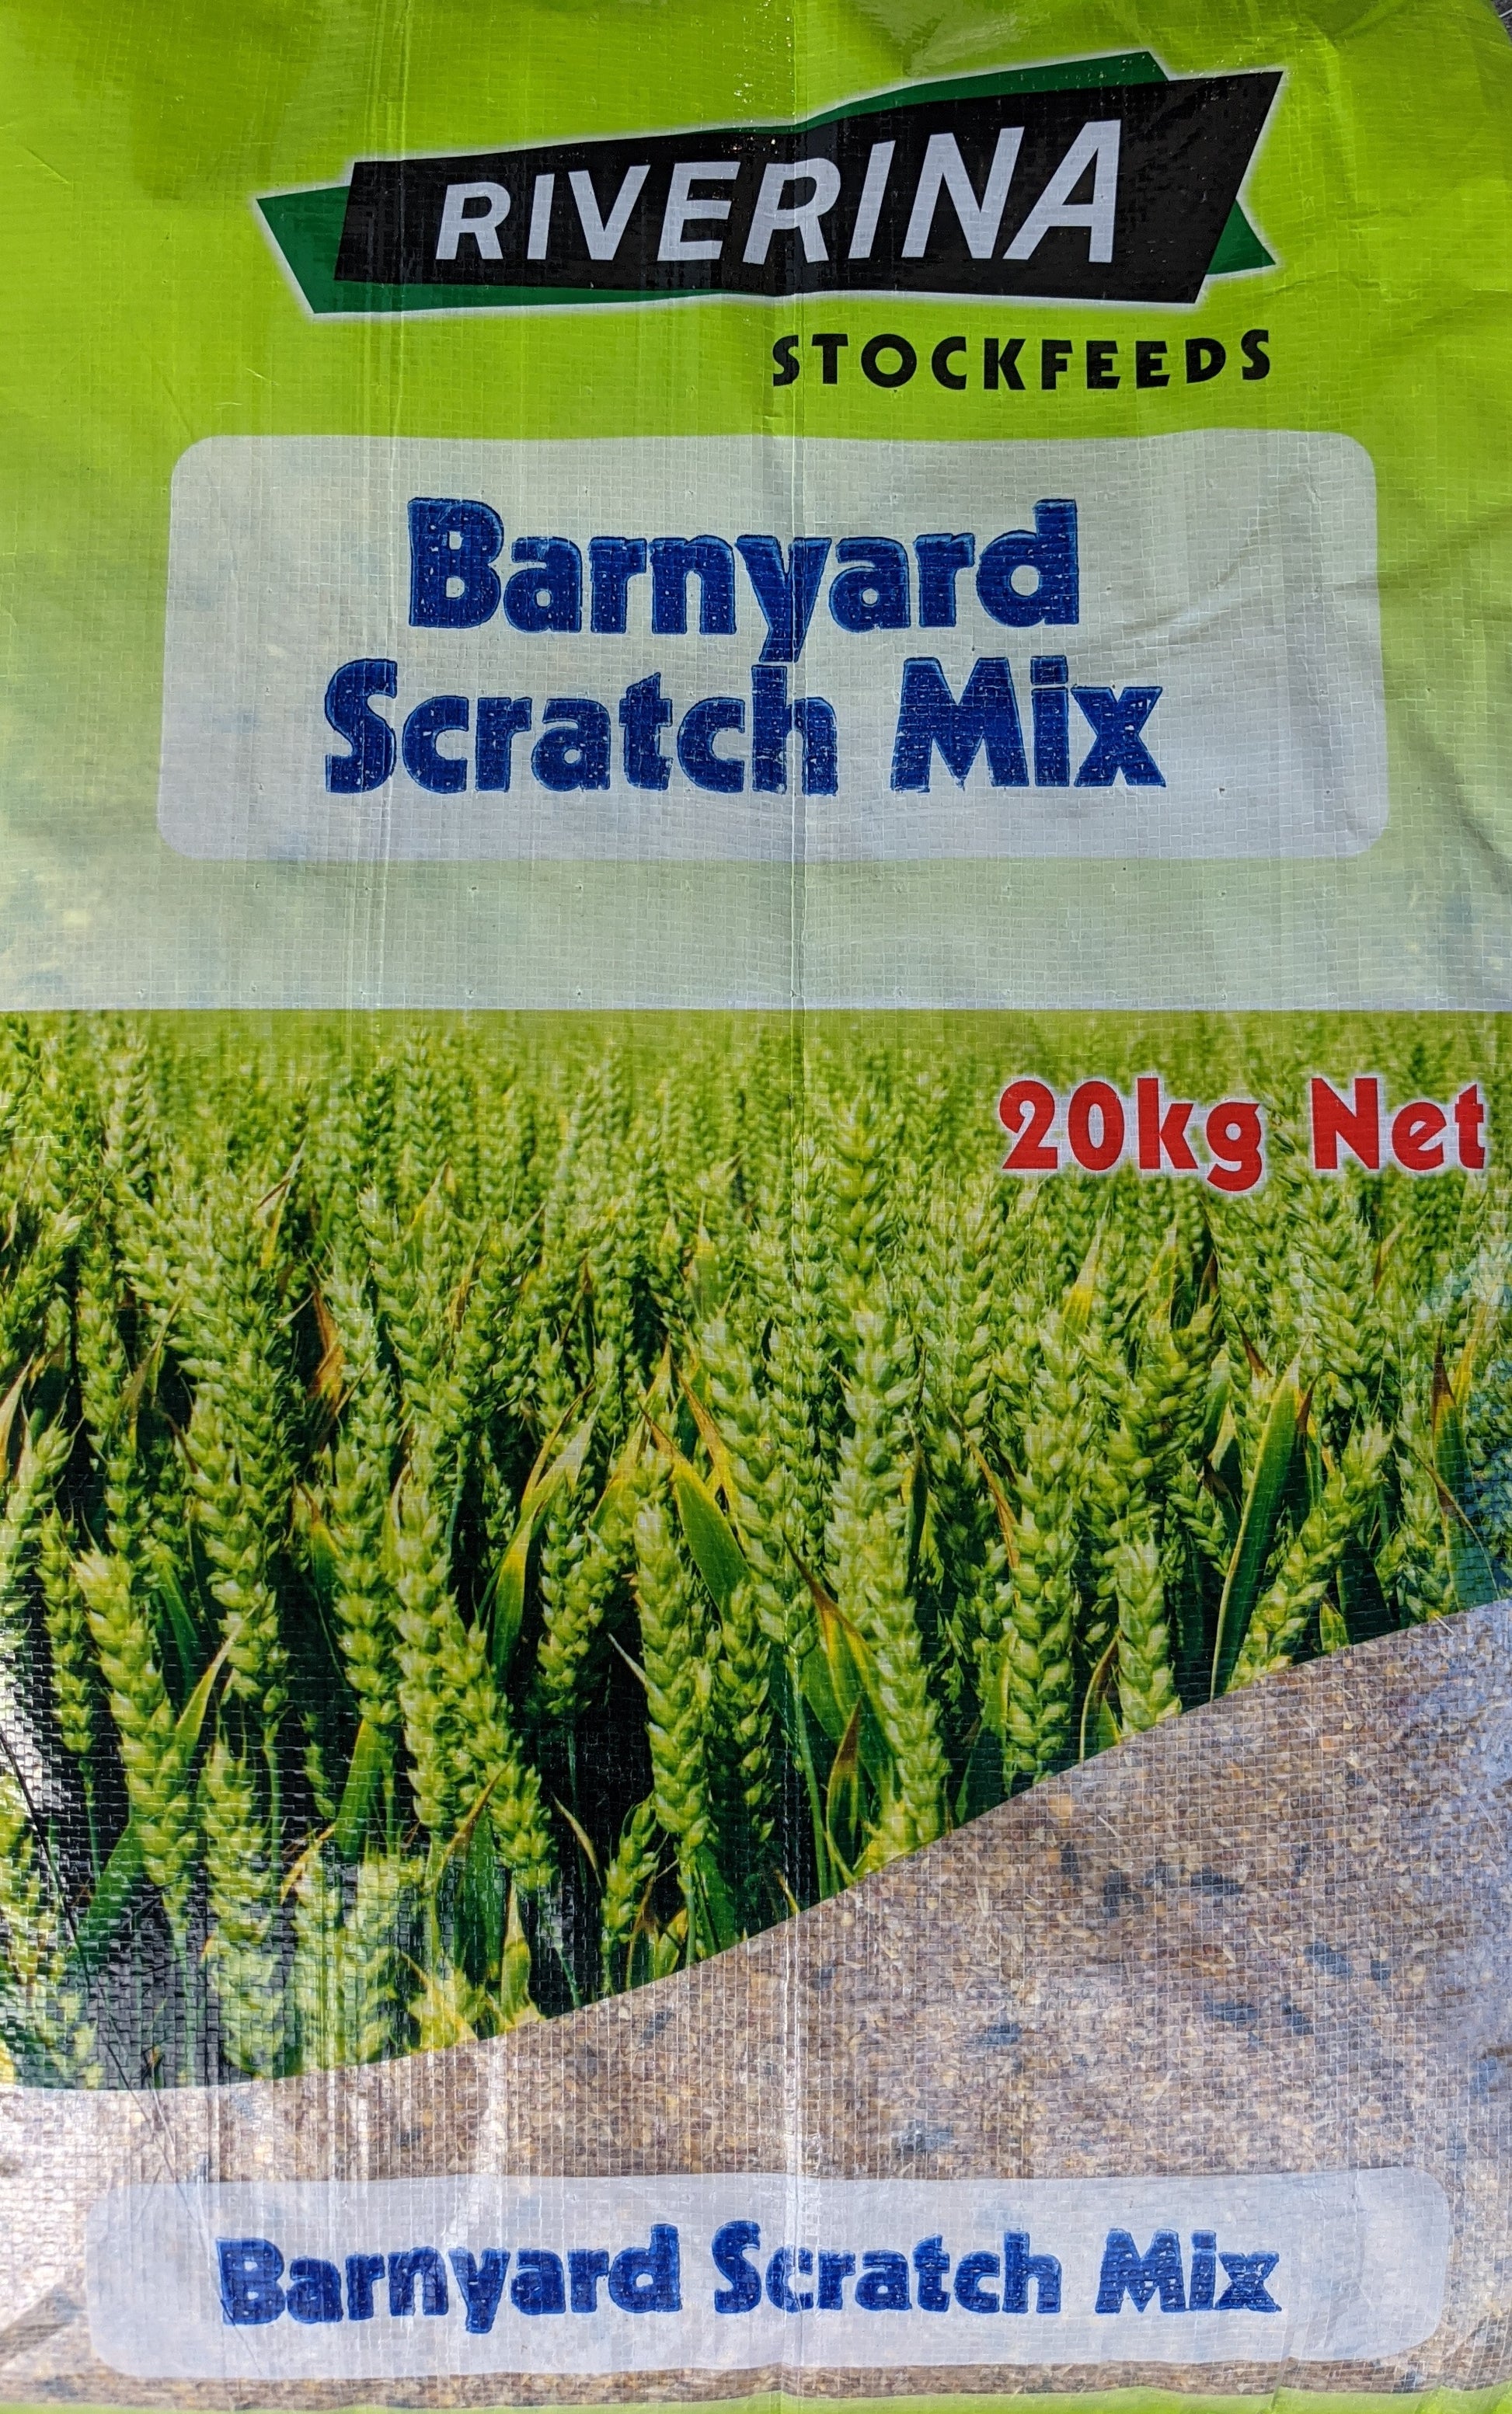 Riverina Barnyard Scratch Mix 20kg at Buckhams General Produce